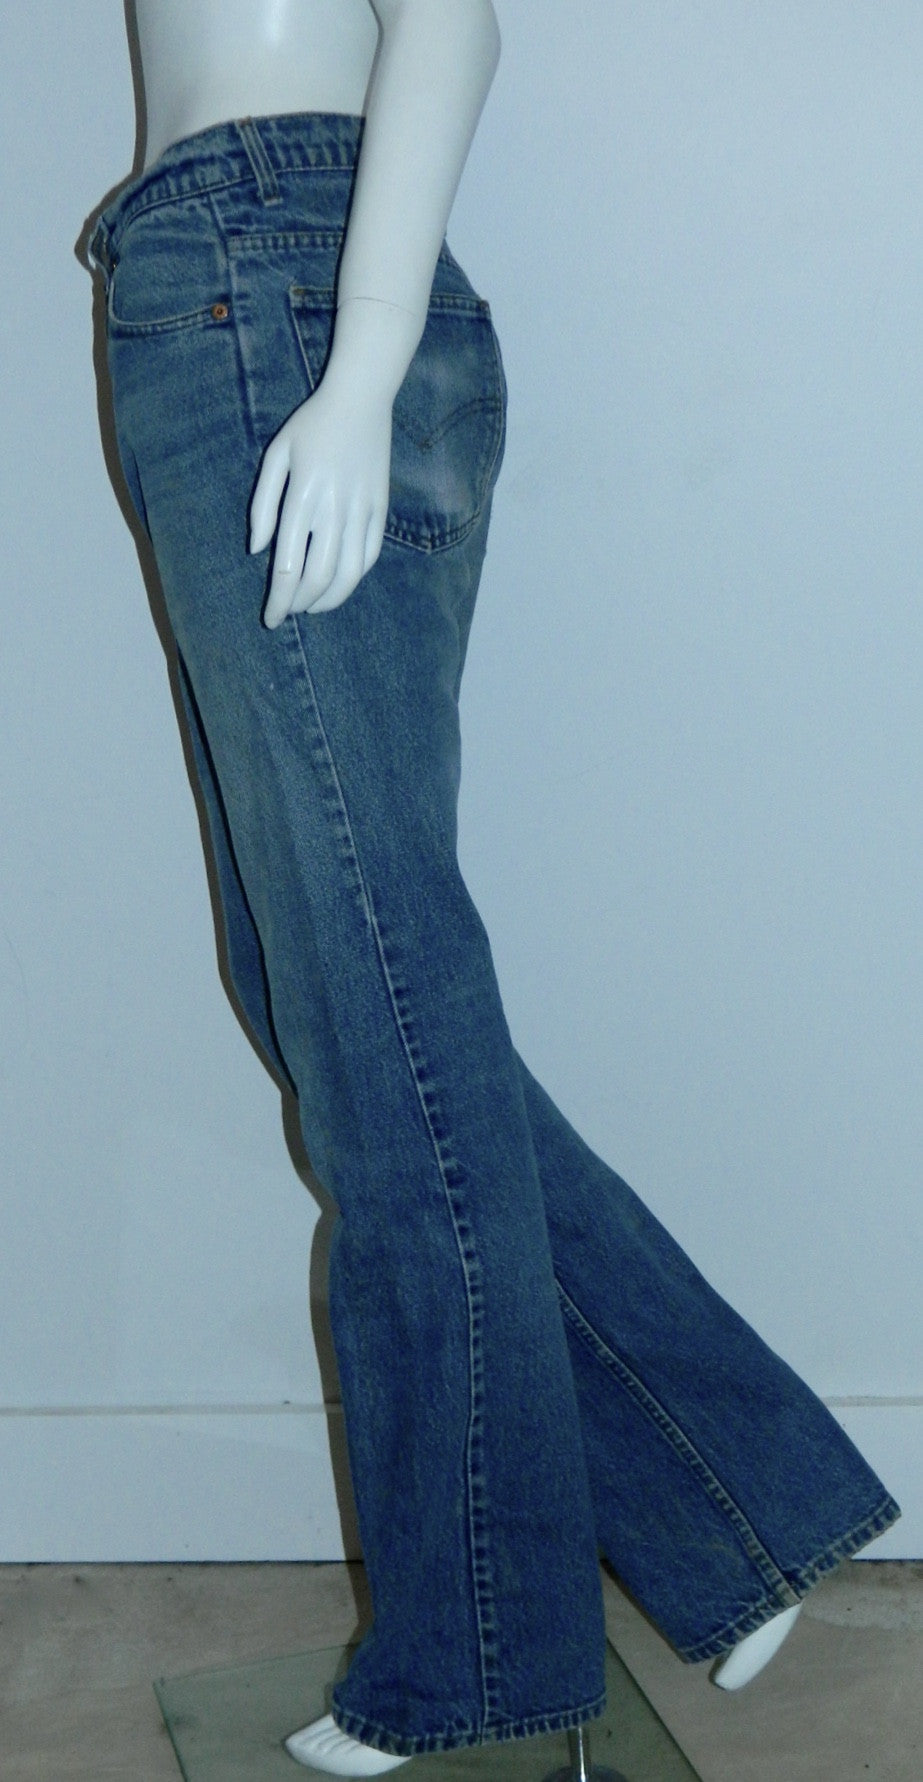 faded denim LEVI'S jeans 517 flare leg vintage 1980s boot cut jeans 31 x 36